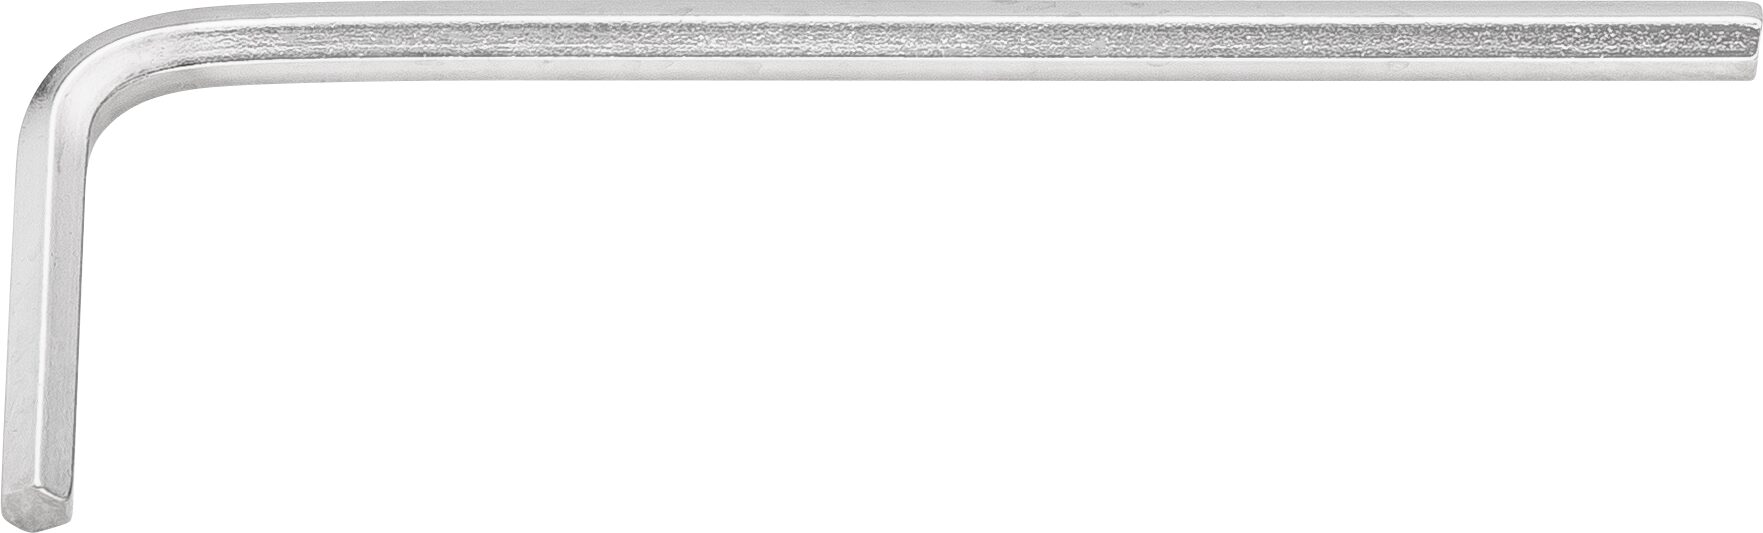 HAZET Winkelschraubendreher 2100-025 · Innen Sechskant Profil · 2.5 mm